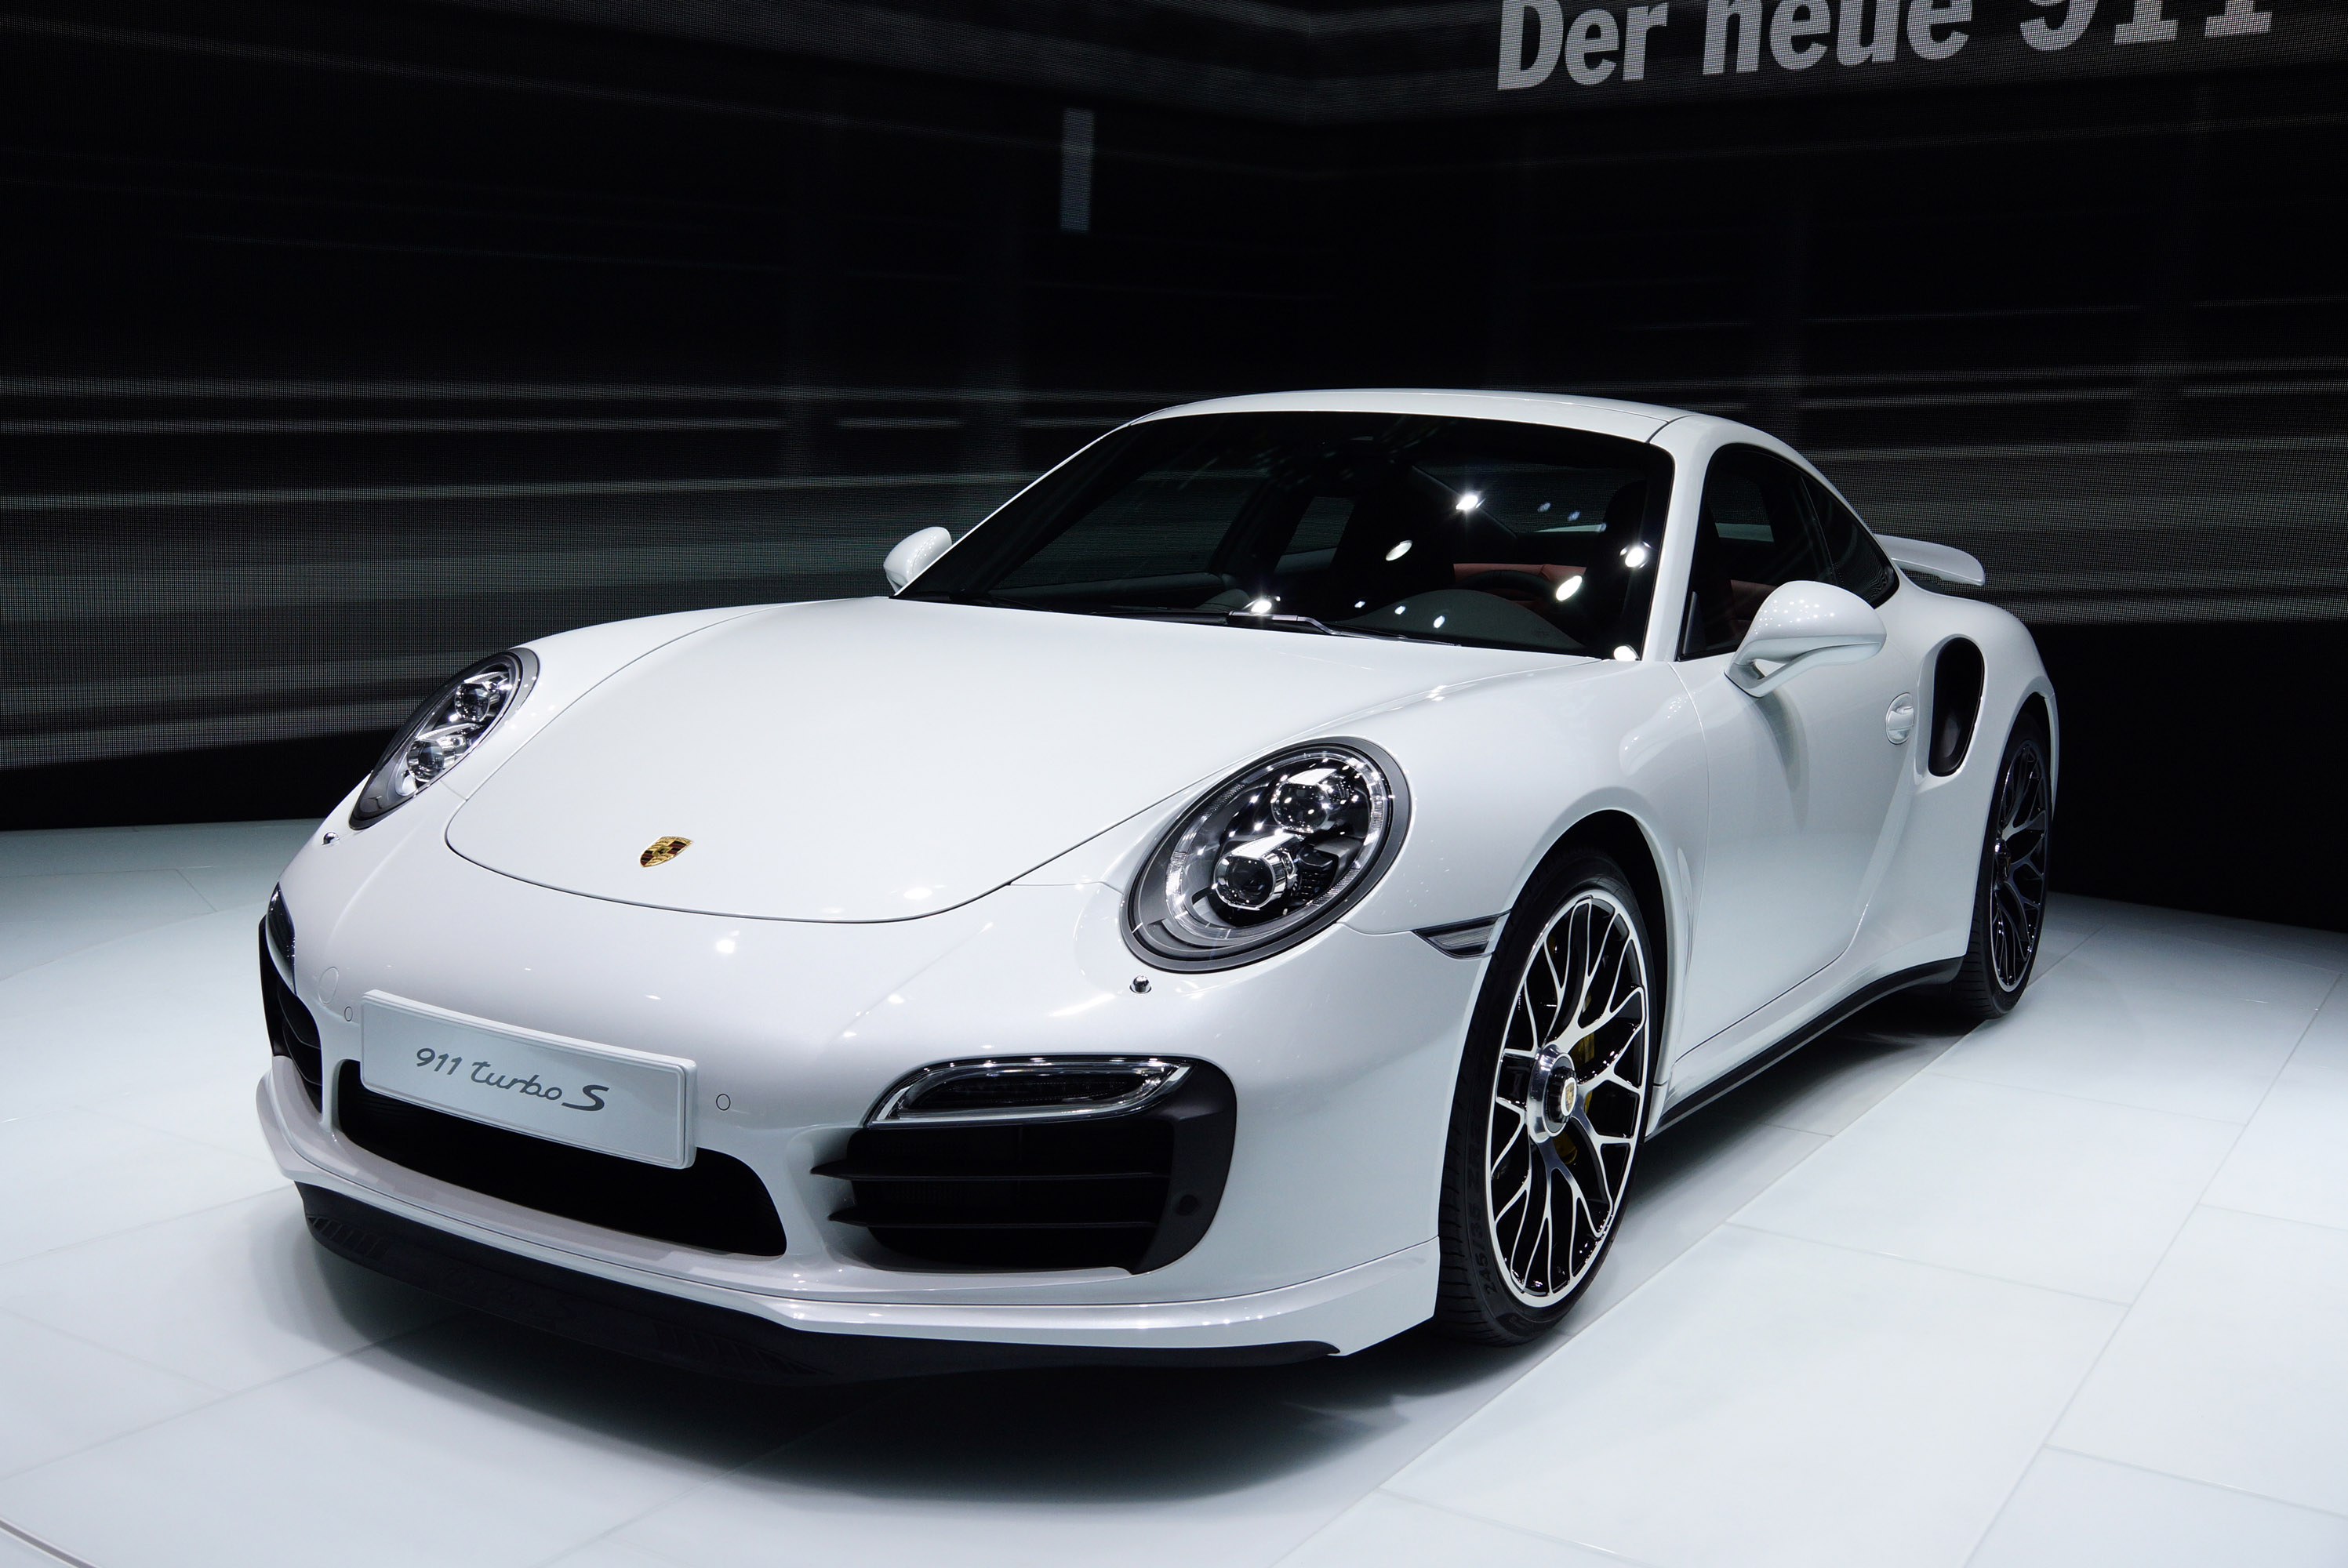 Porsche 911 Turbo S Frankfurt